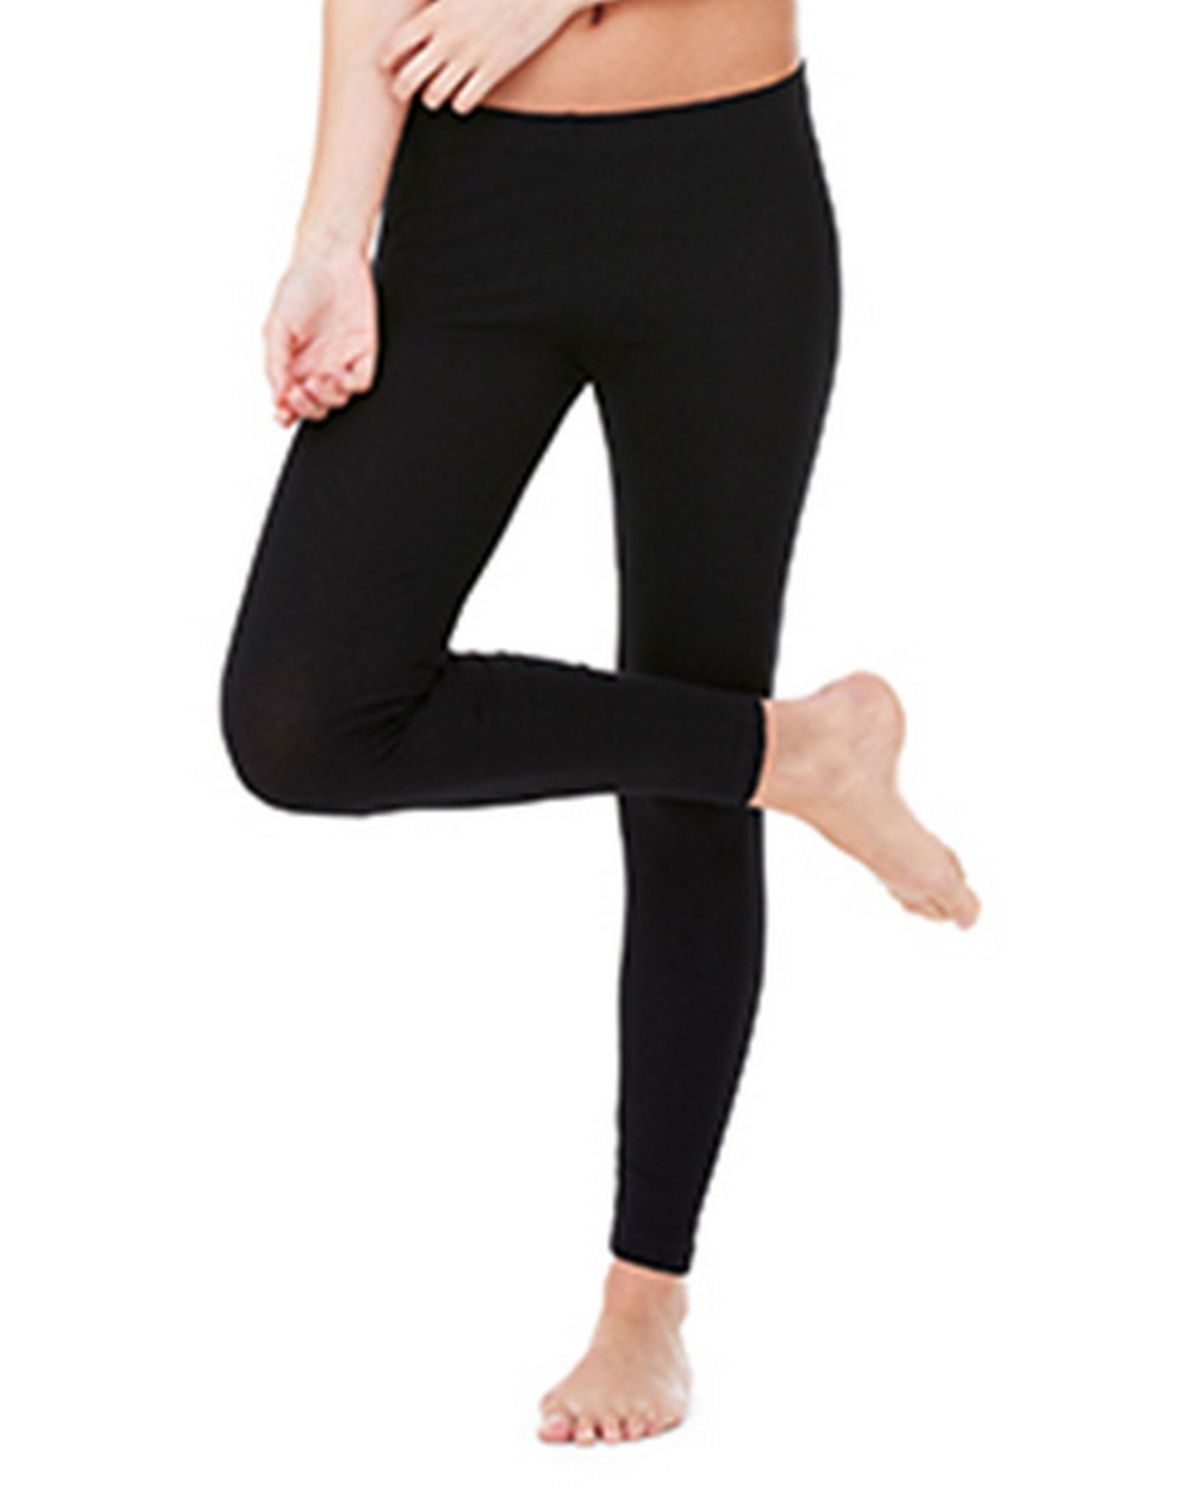 American Apparel Yoga Pants Size Chart